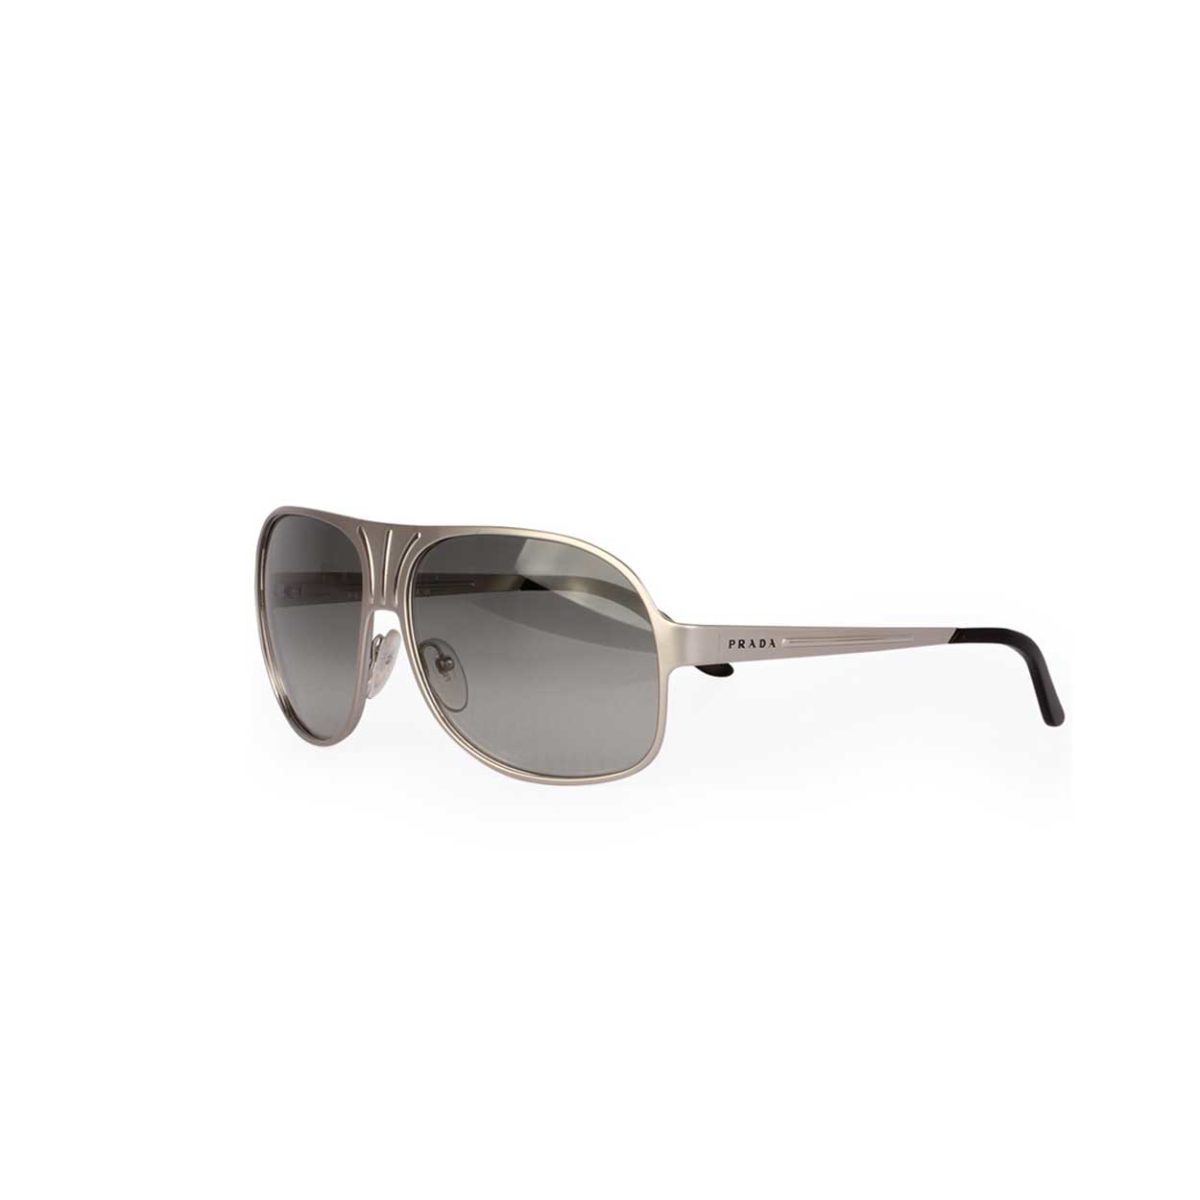 prada silver sunglasses